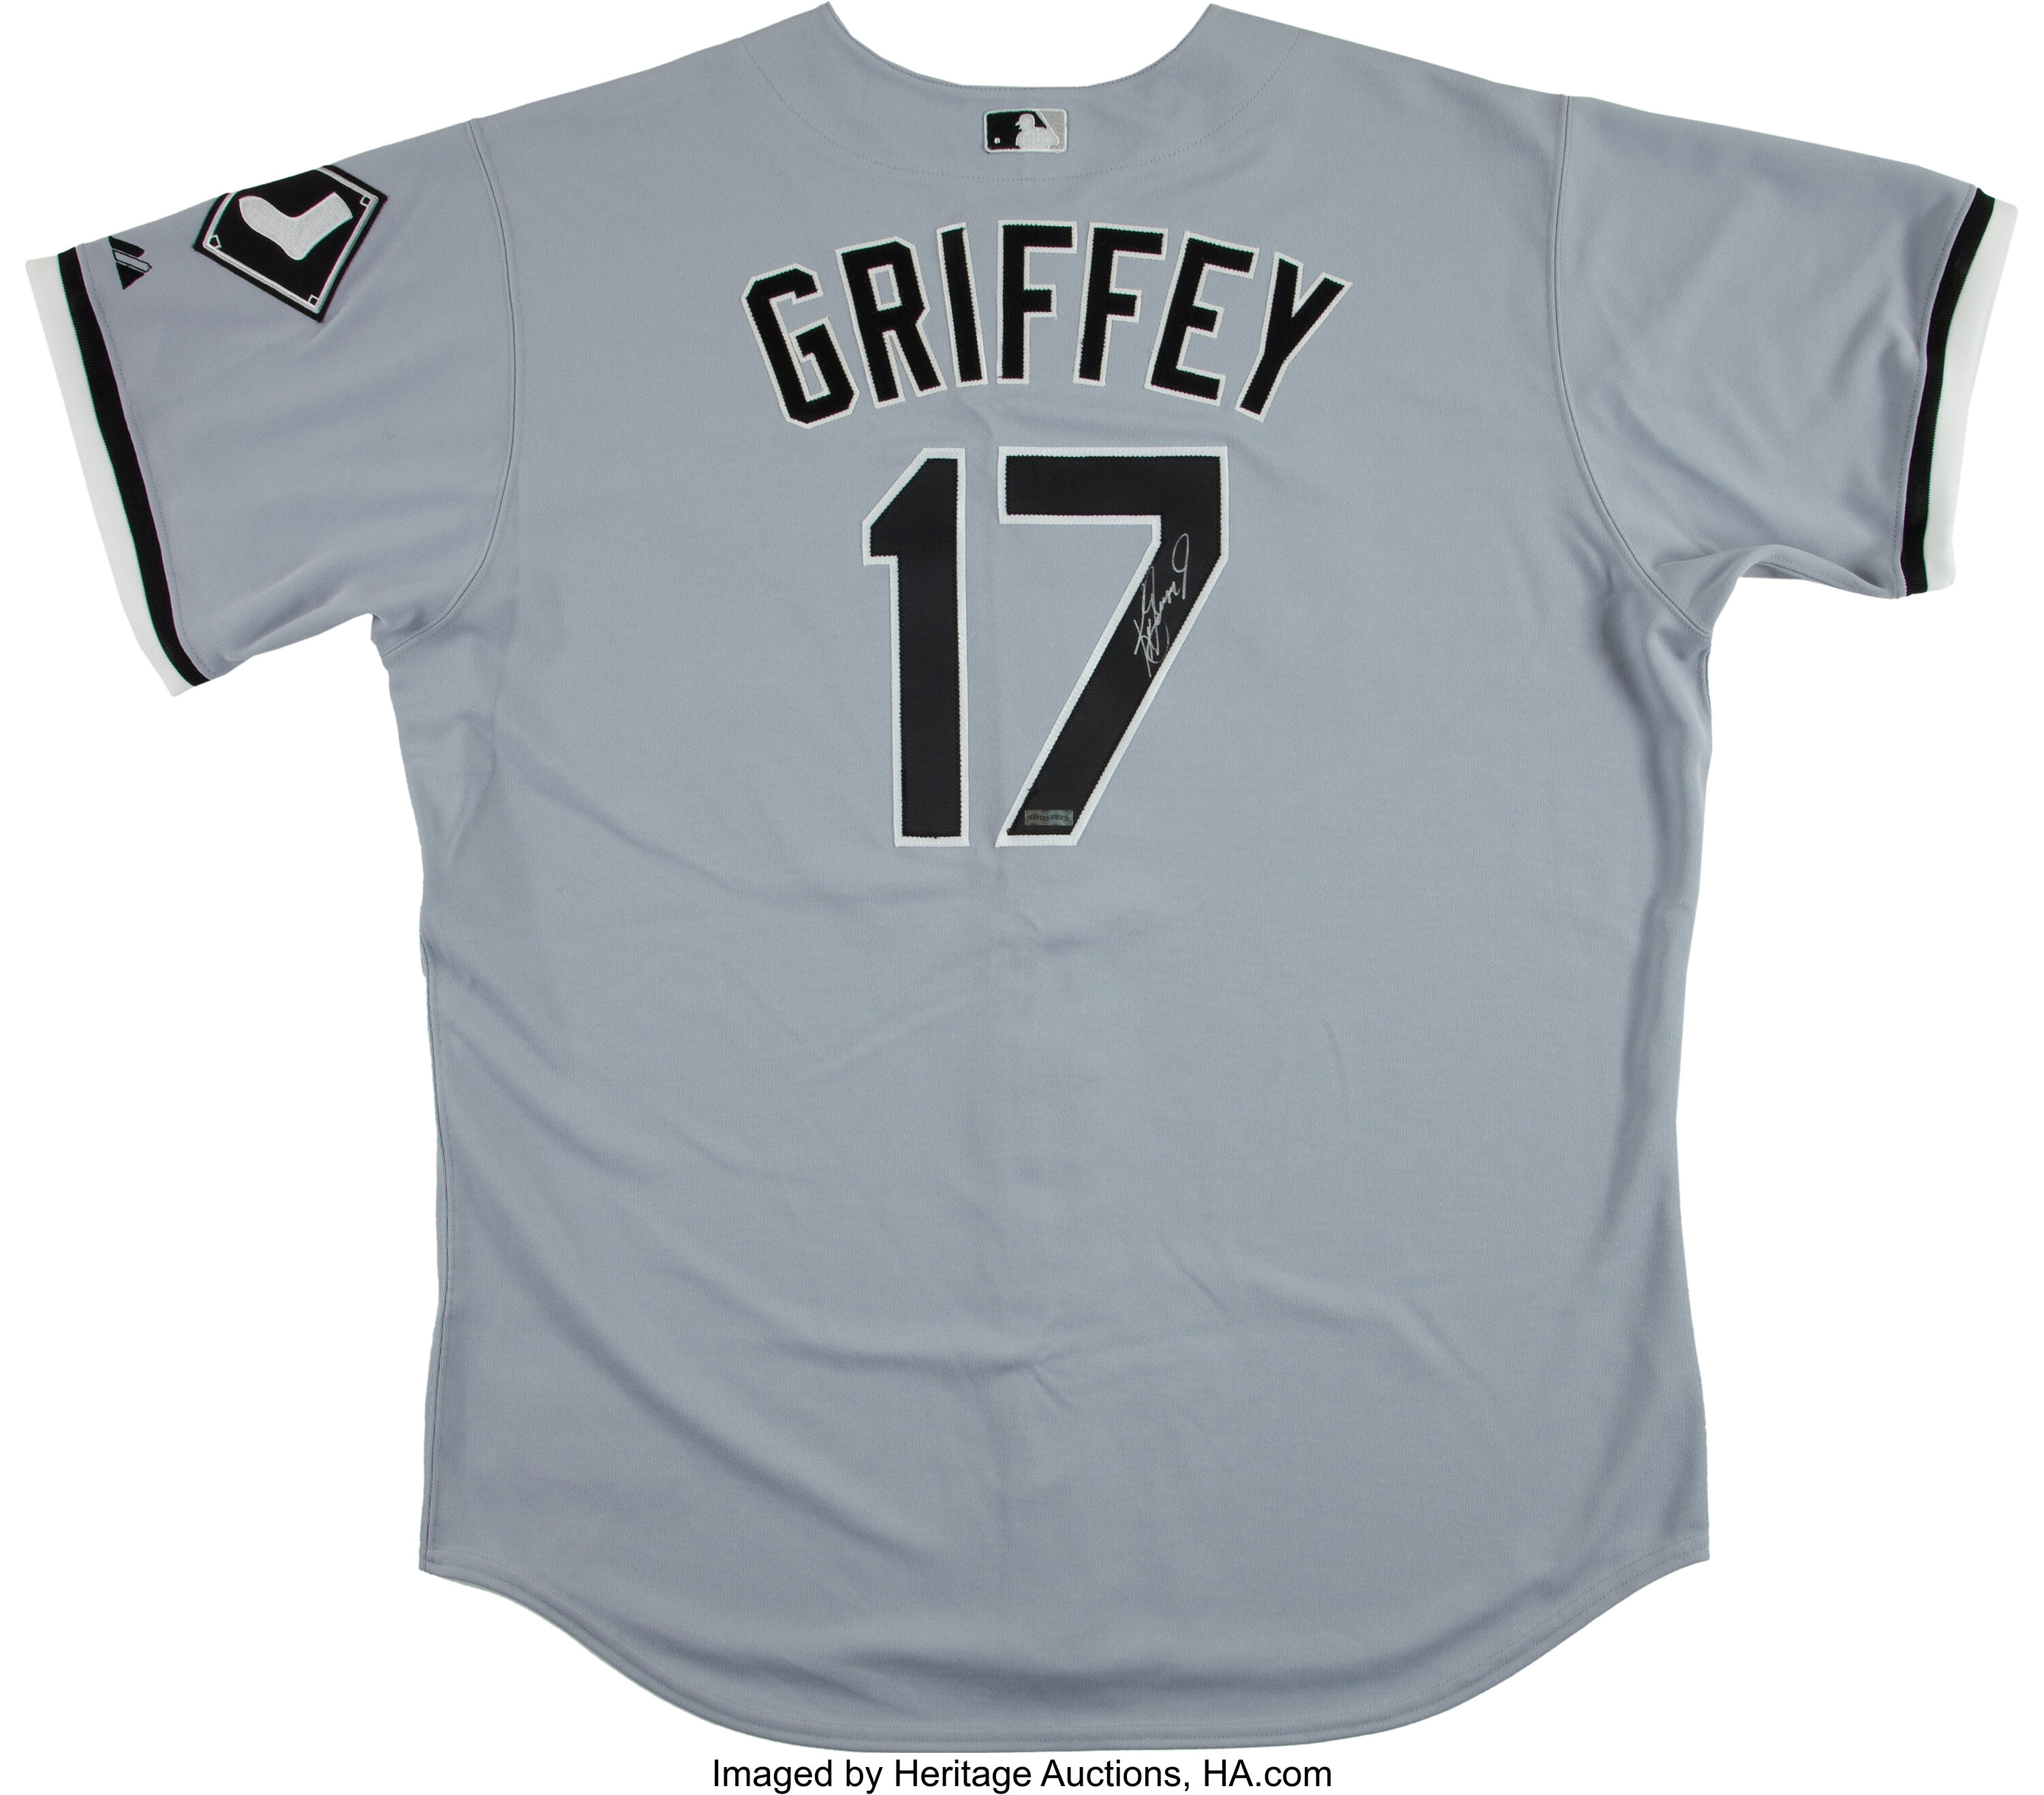 Ken Griffey Jr. Signed Chicago White Sox Jersey - Upper Deck